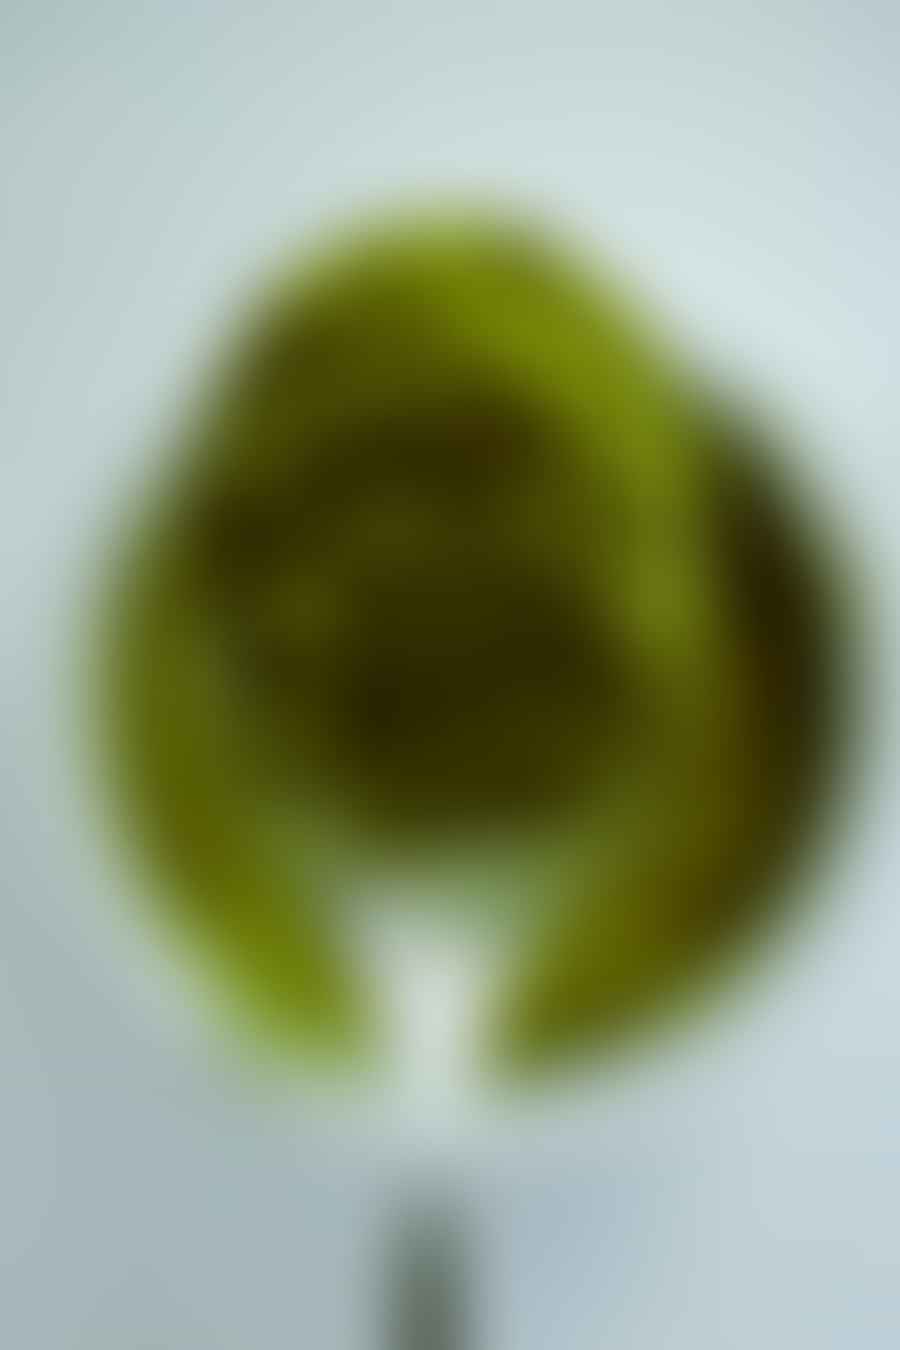 Close-up view of vibrant green matcha tea powder